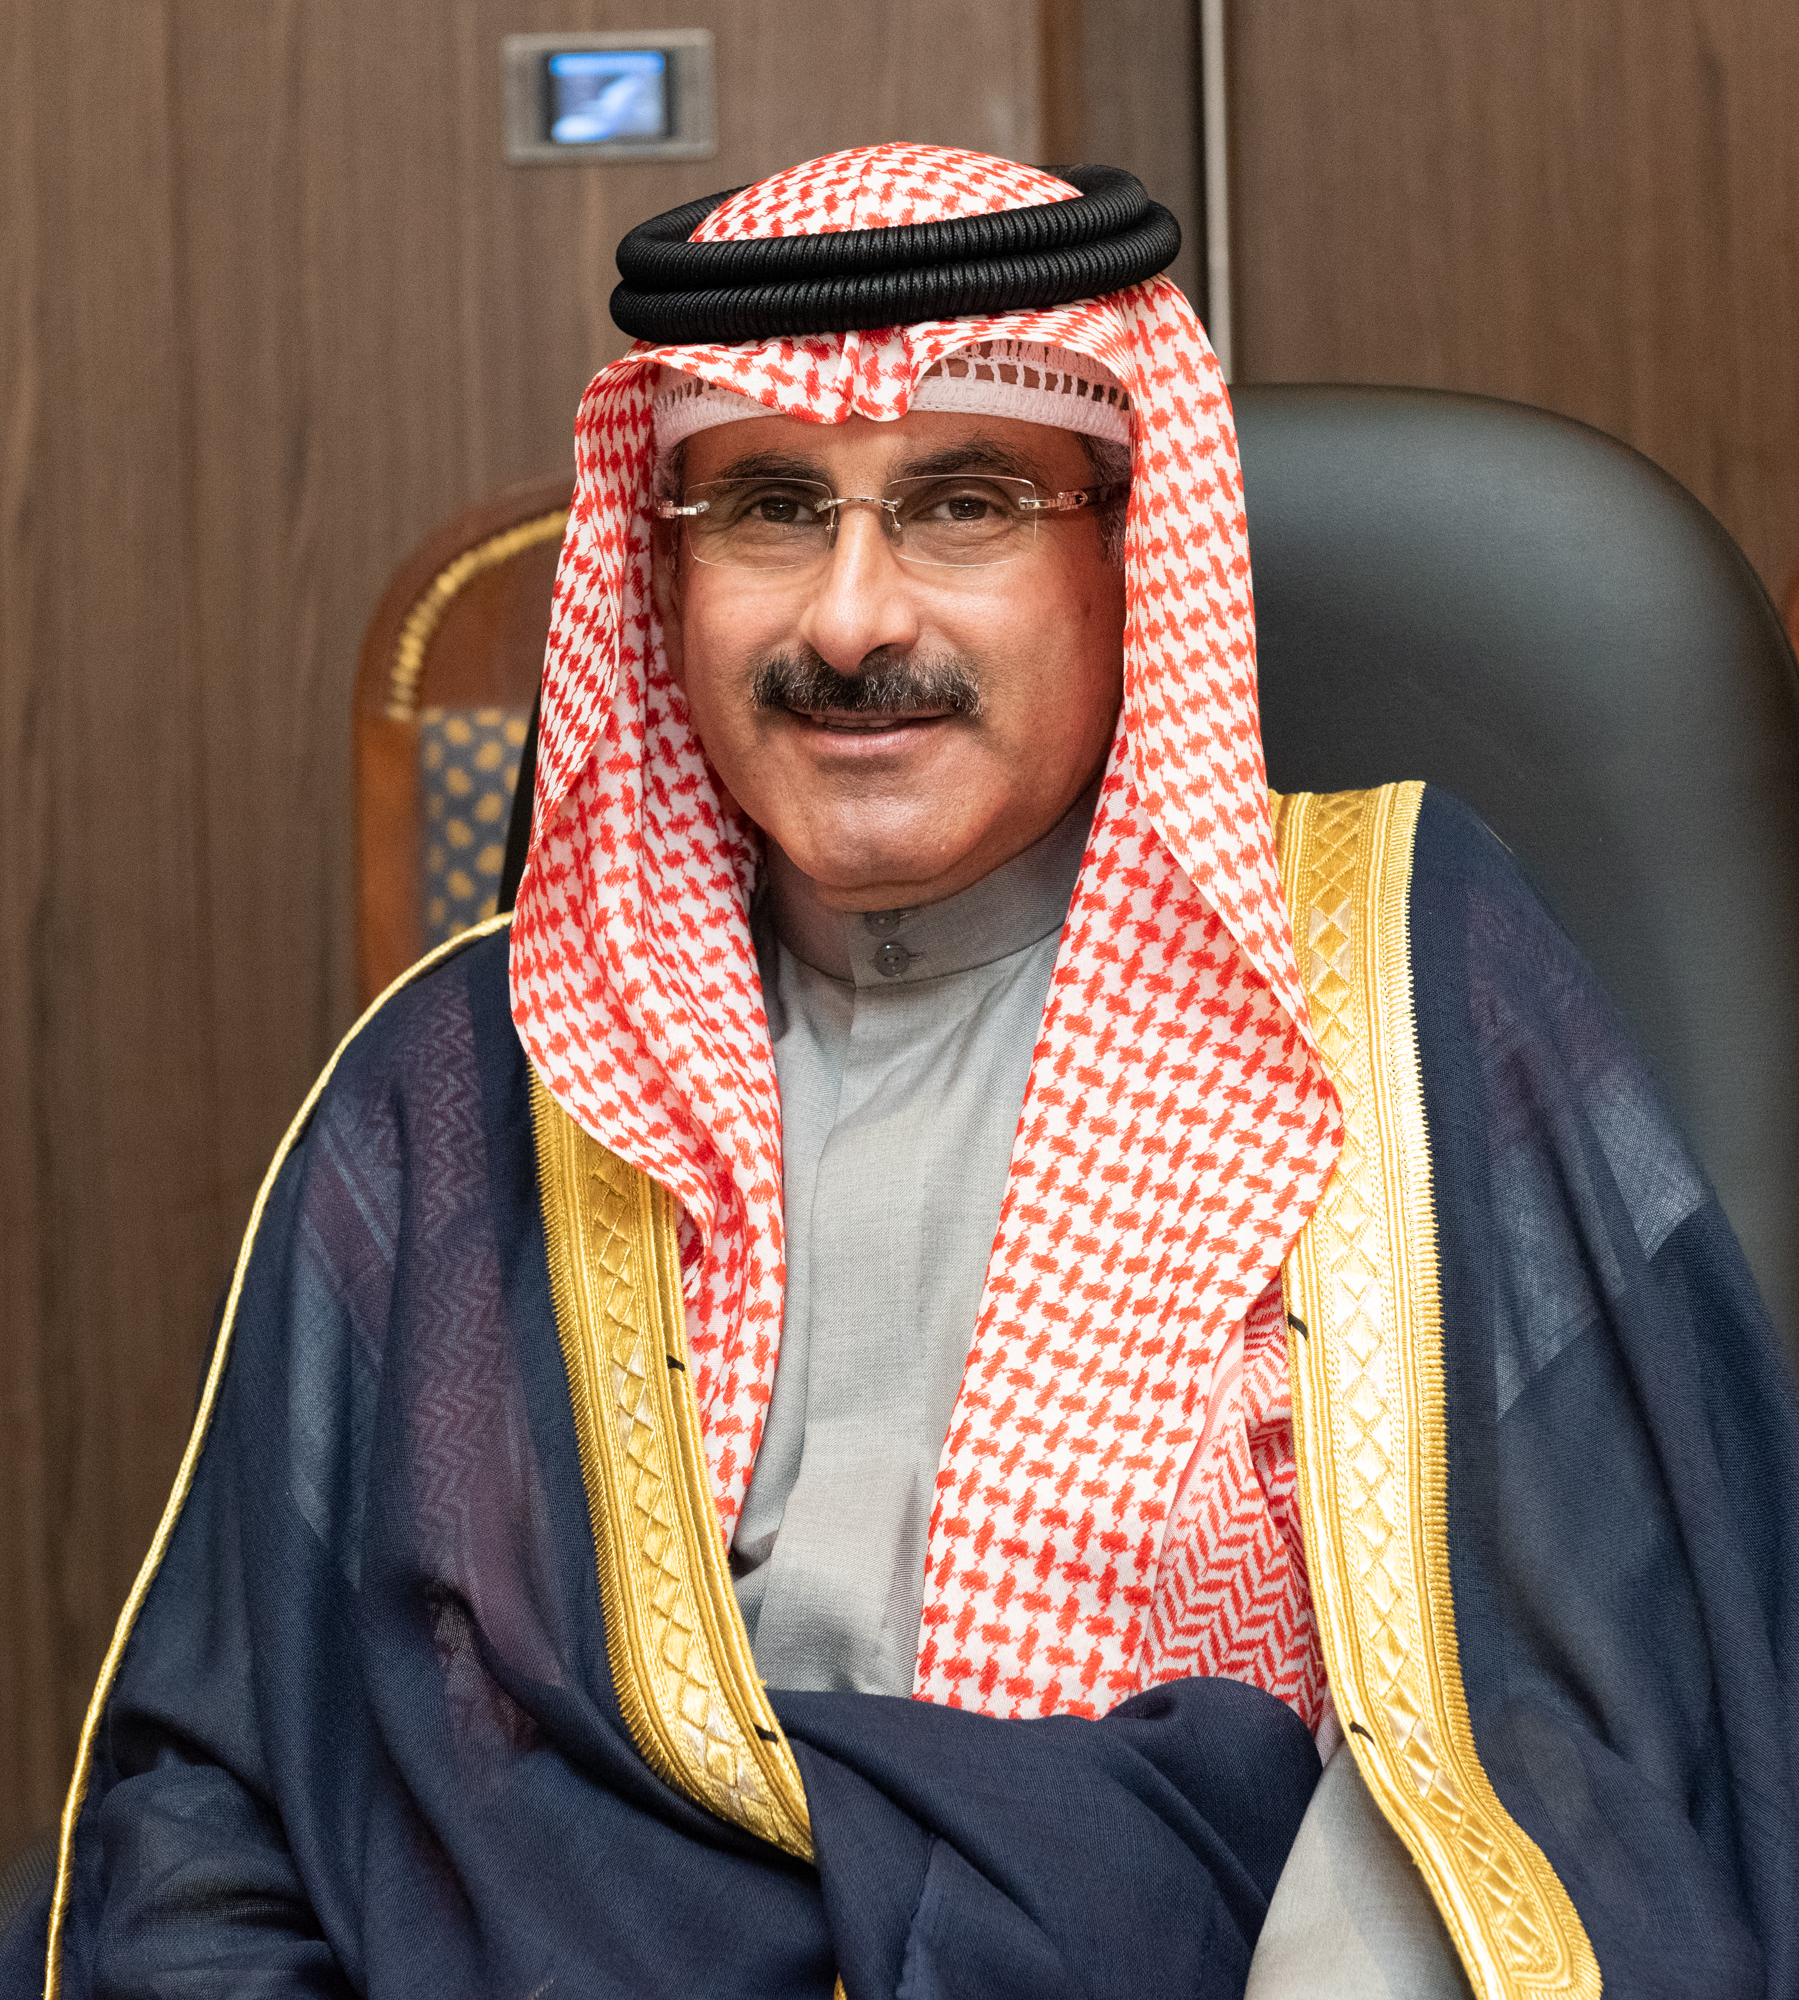 Le DG de KUNA, Cheikh Moubarak Duaij Ibrahim Al-Sabah